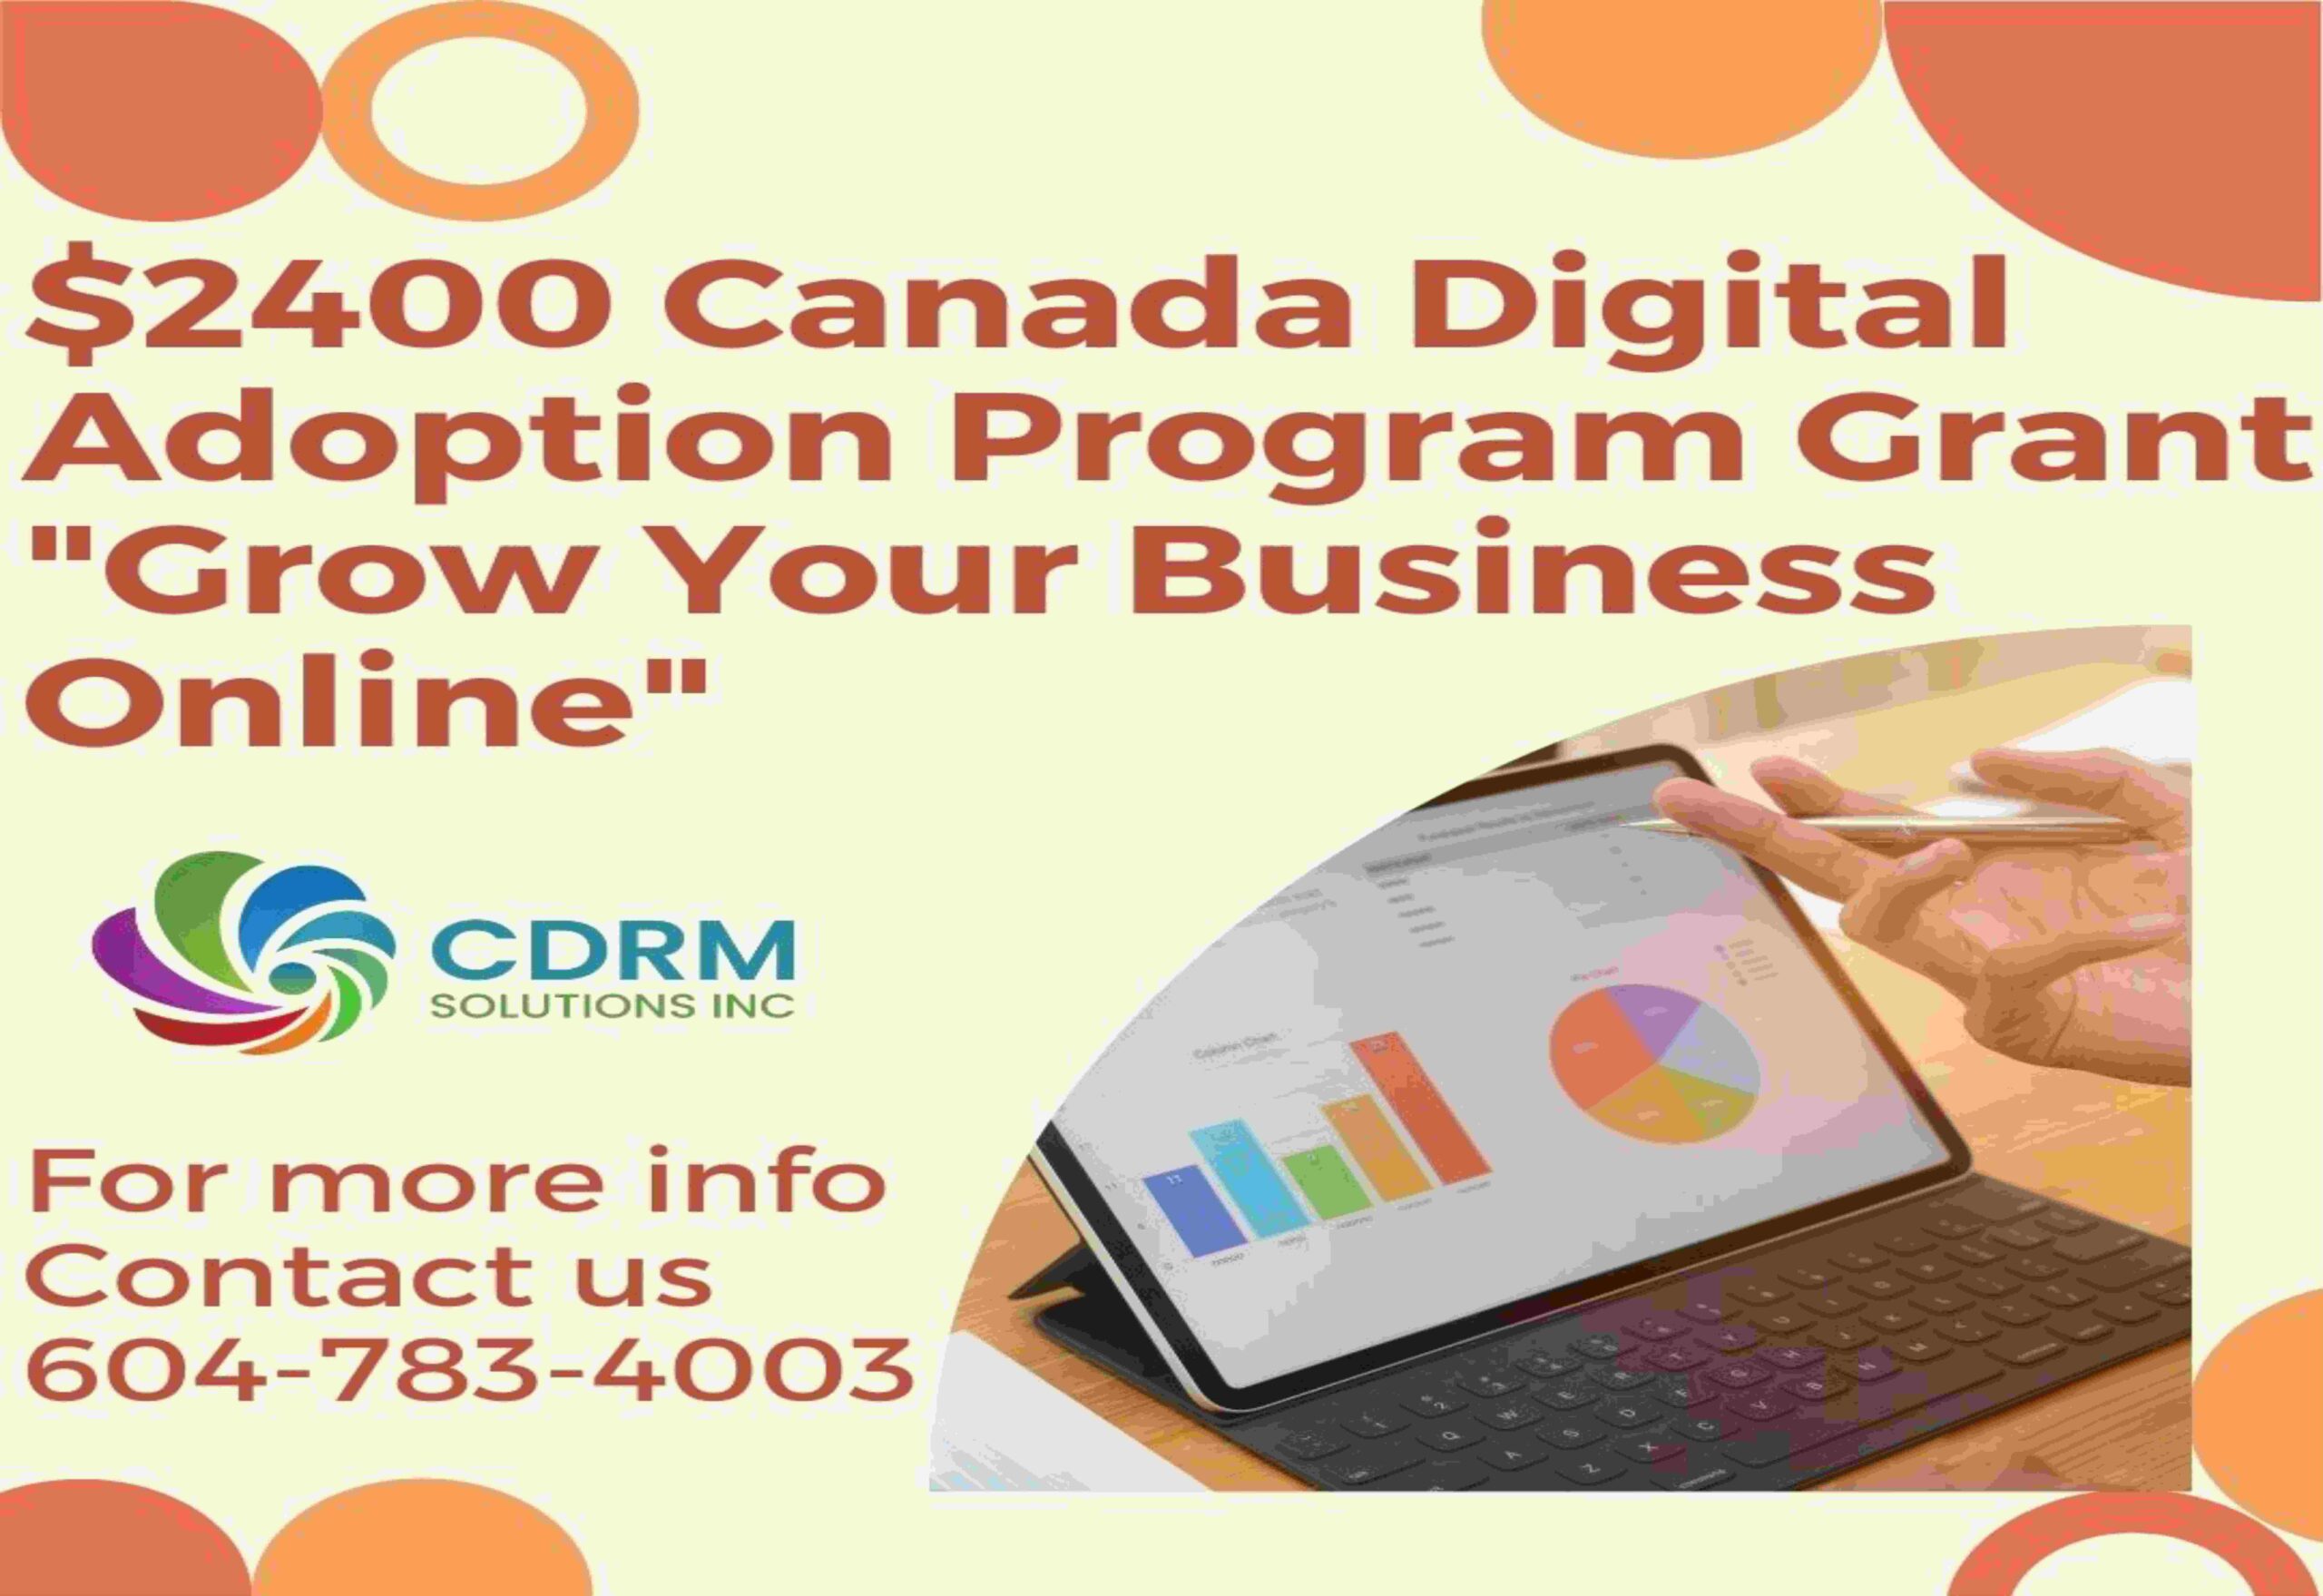 Canada Digital Adoption Program CDAP “Grow Your Business Online Grant for Small Businesses